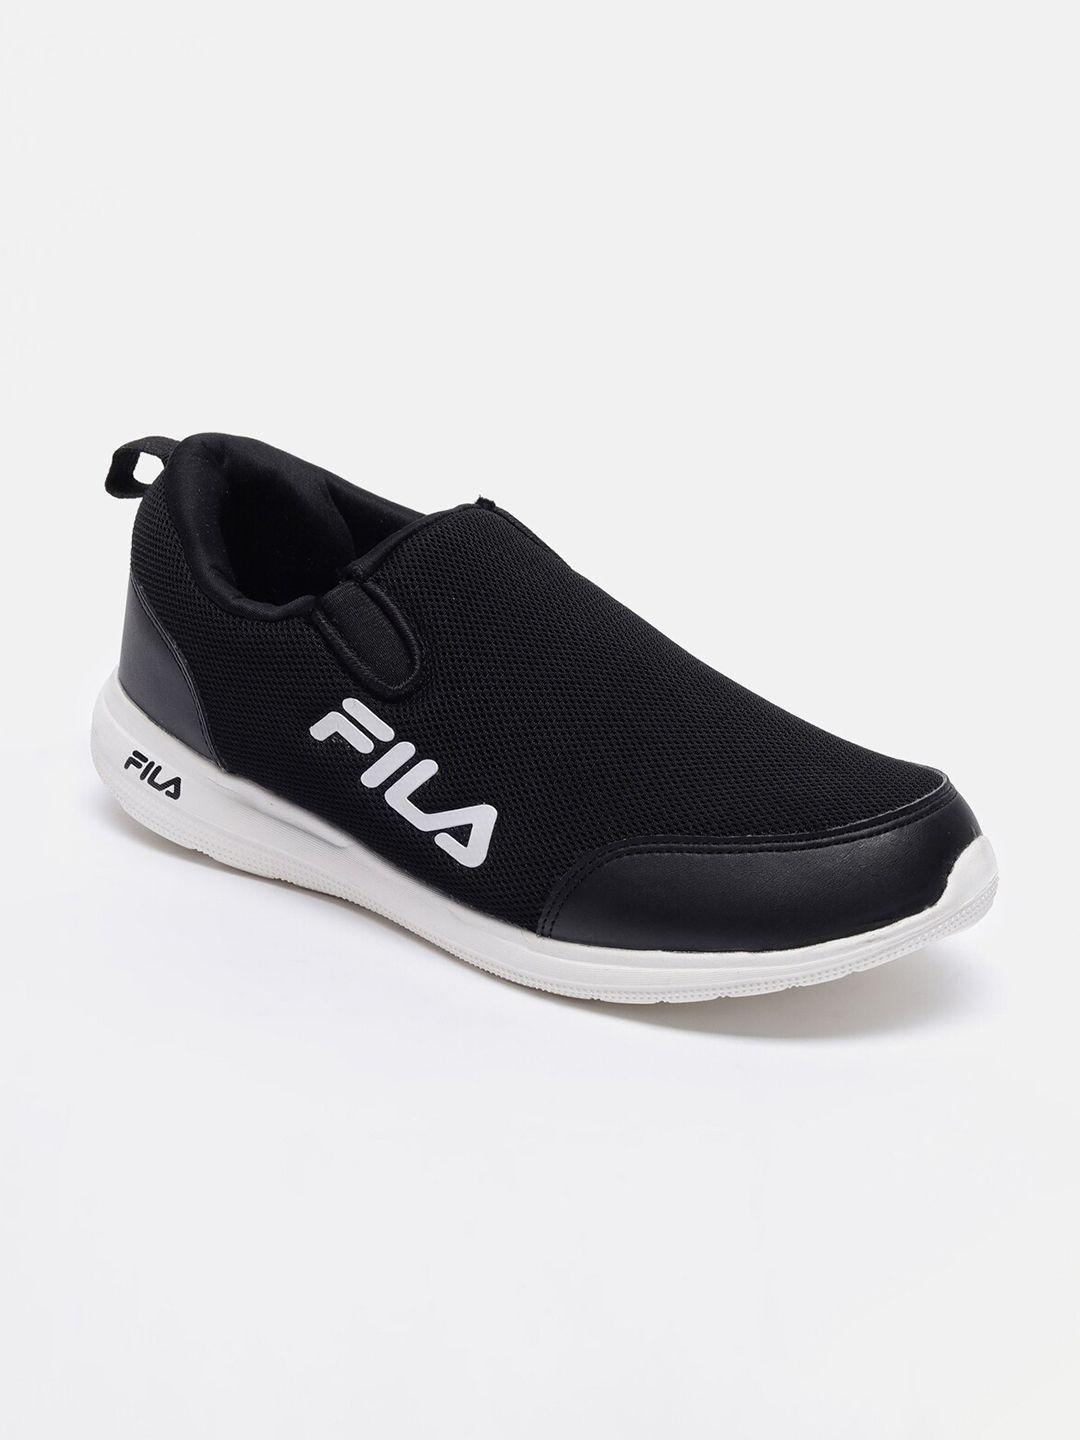 fila-men-black-running-non-marking-alrigo-plus-shoes